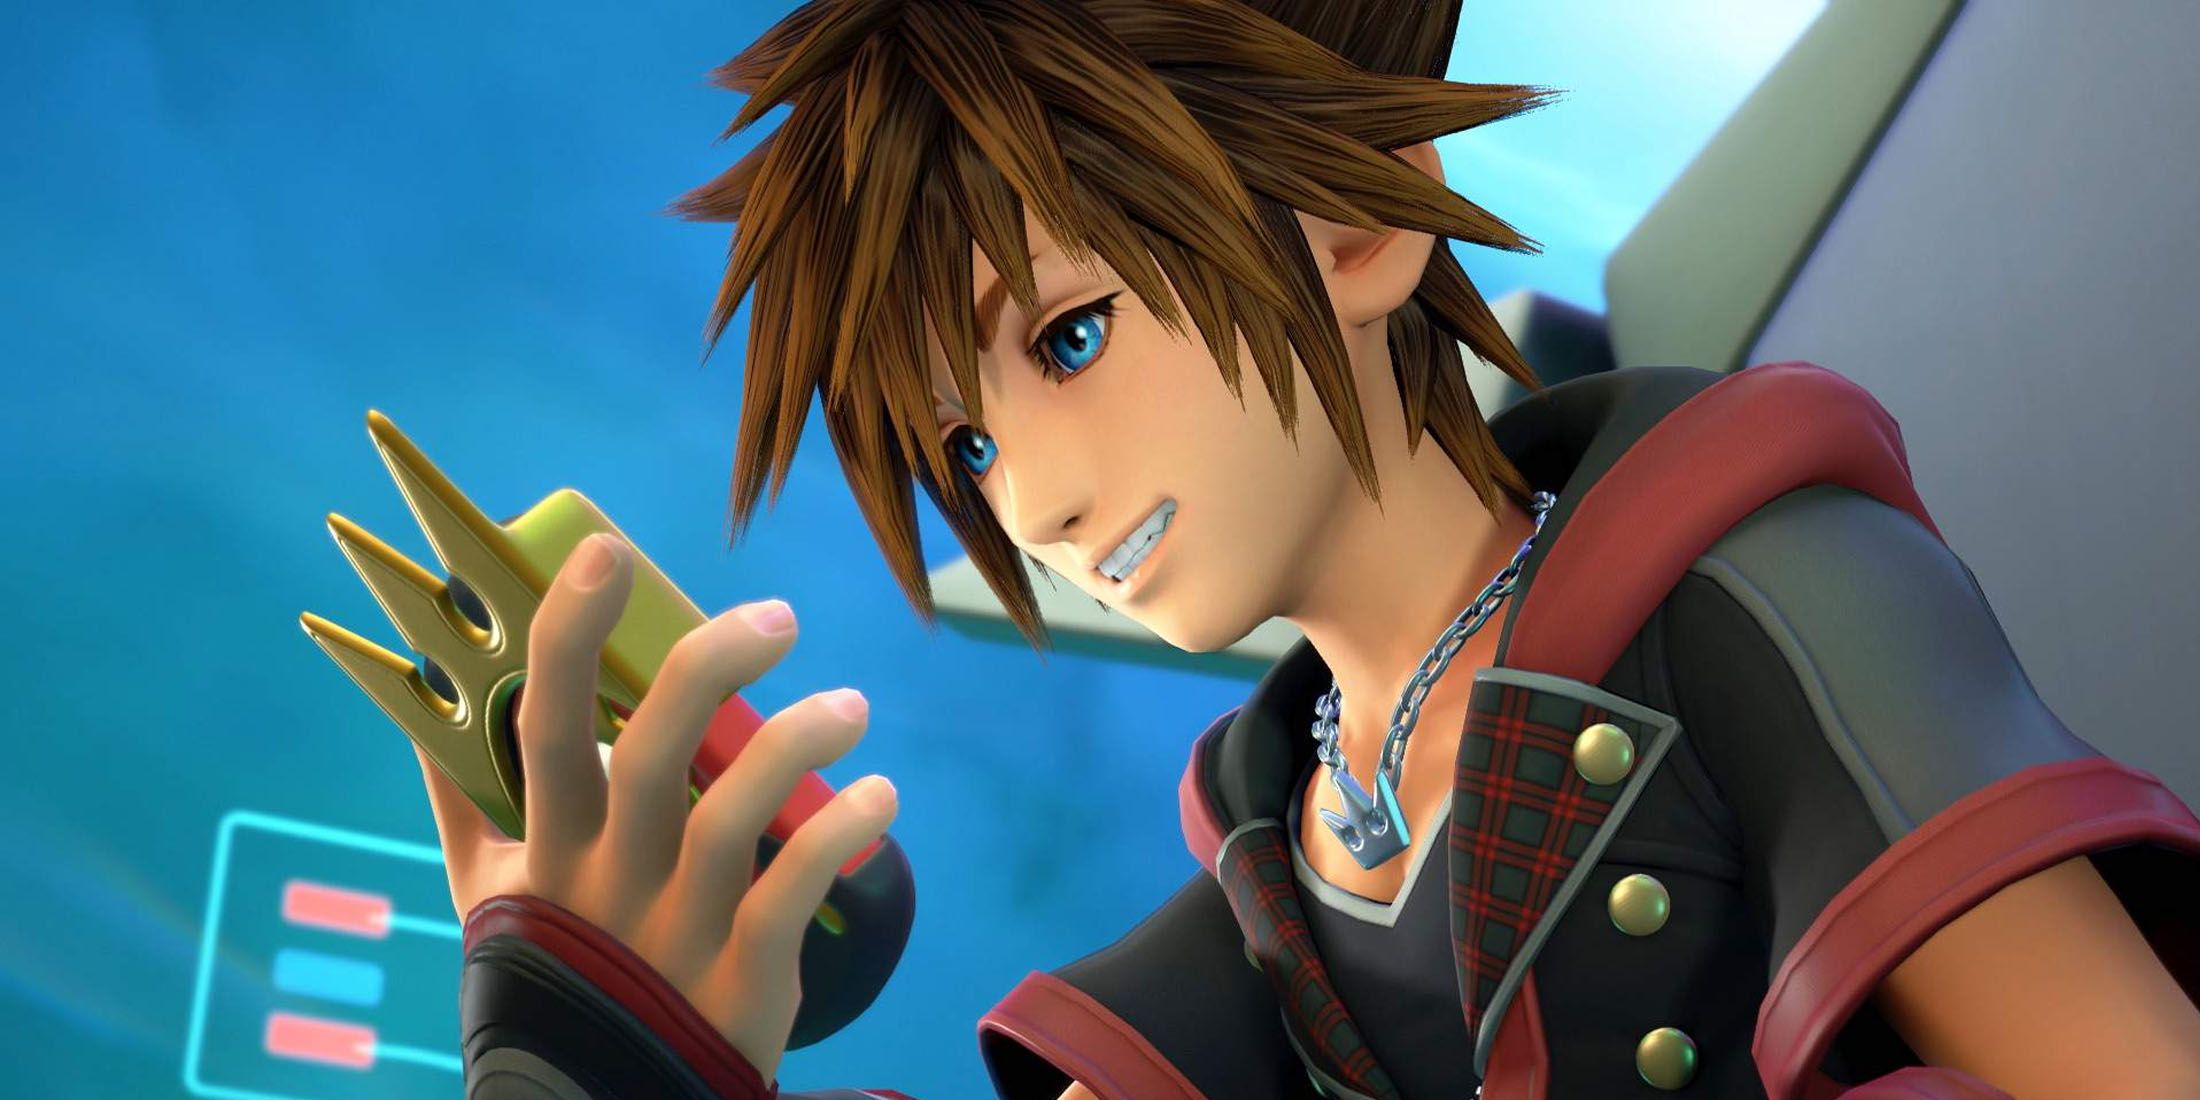 A screenshot of Sora looking at his Gummiphone in Kingdom Hearts 3.